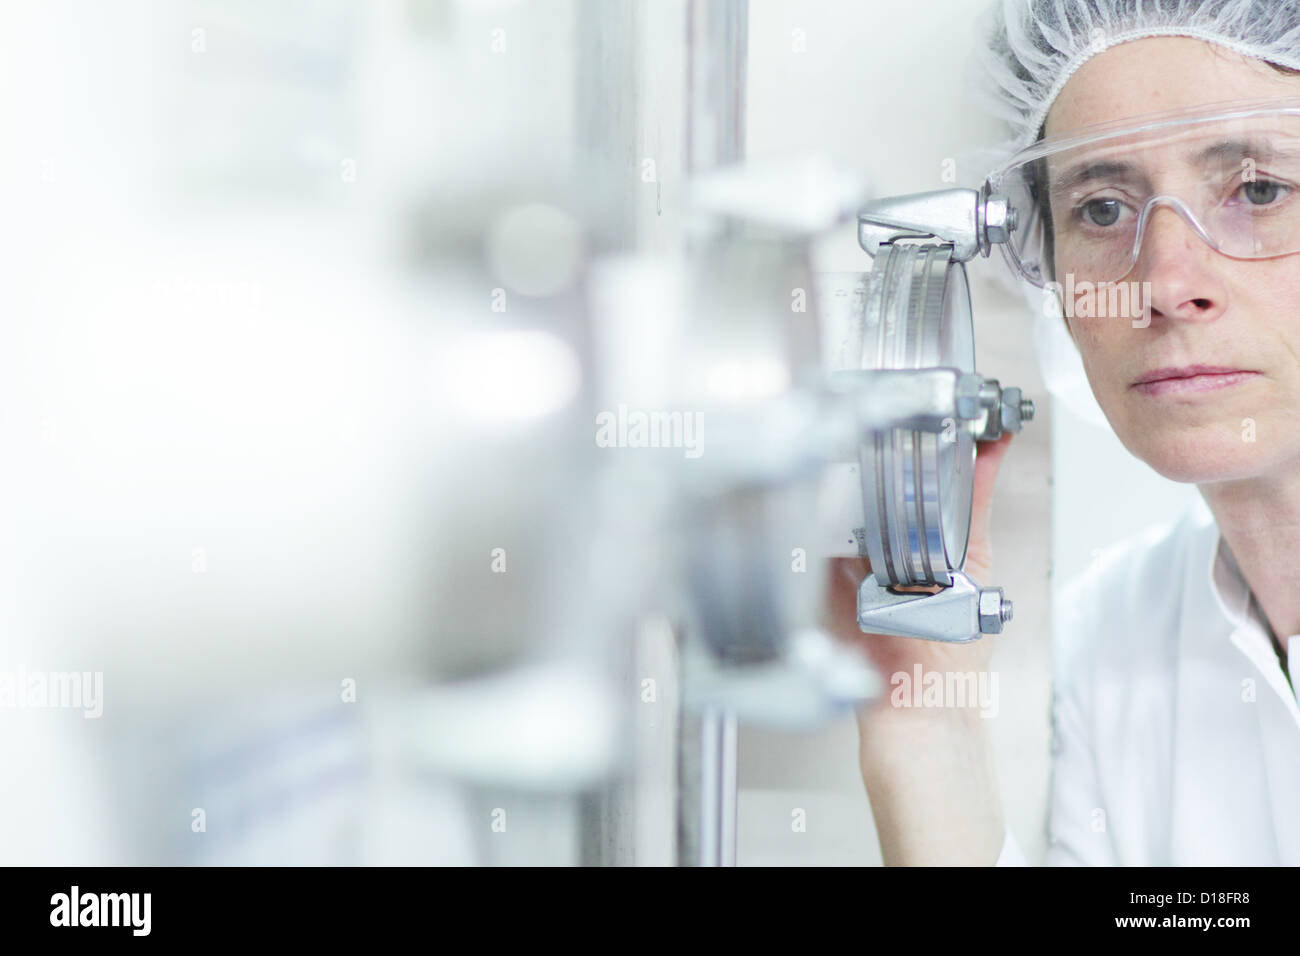 Scientist working in lab Stock Photo